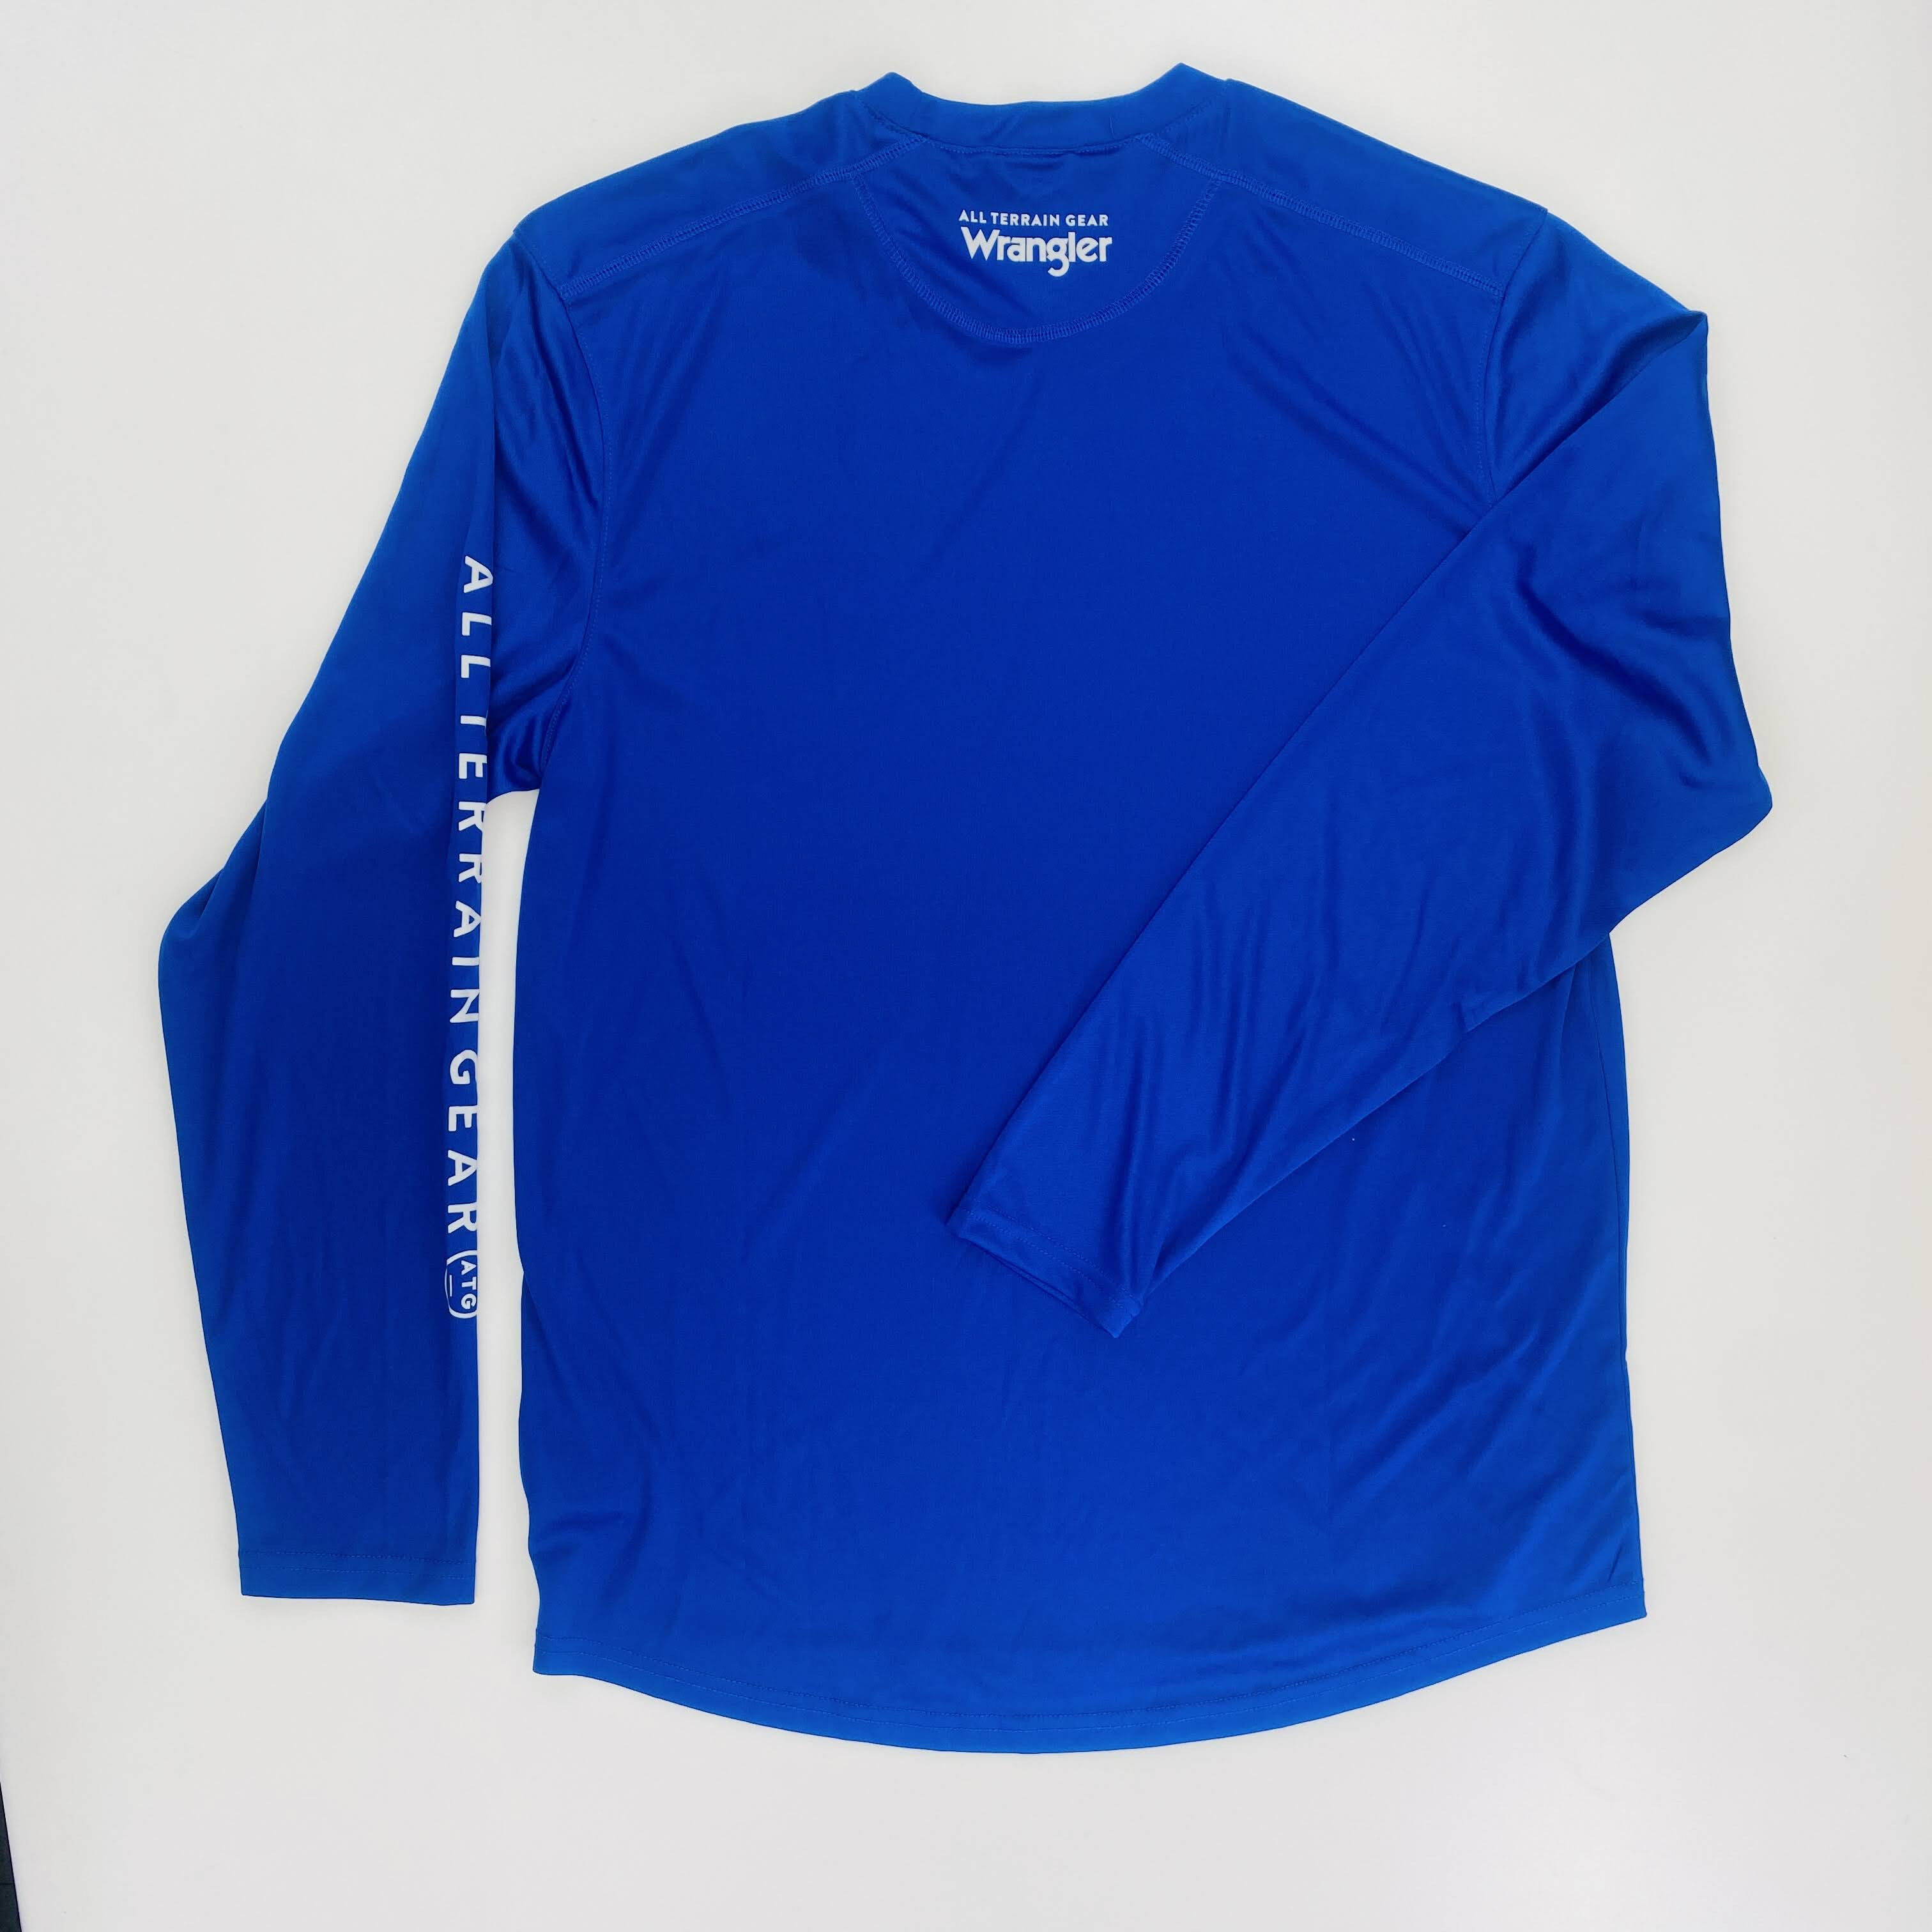 Wrangler Ls Sun Tee - Seconde main T-shirt homme - Bleu - M | Hardloop